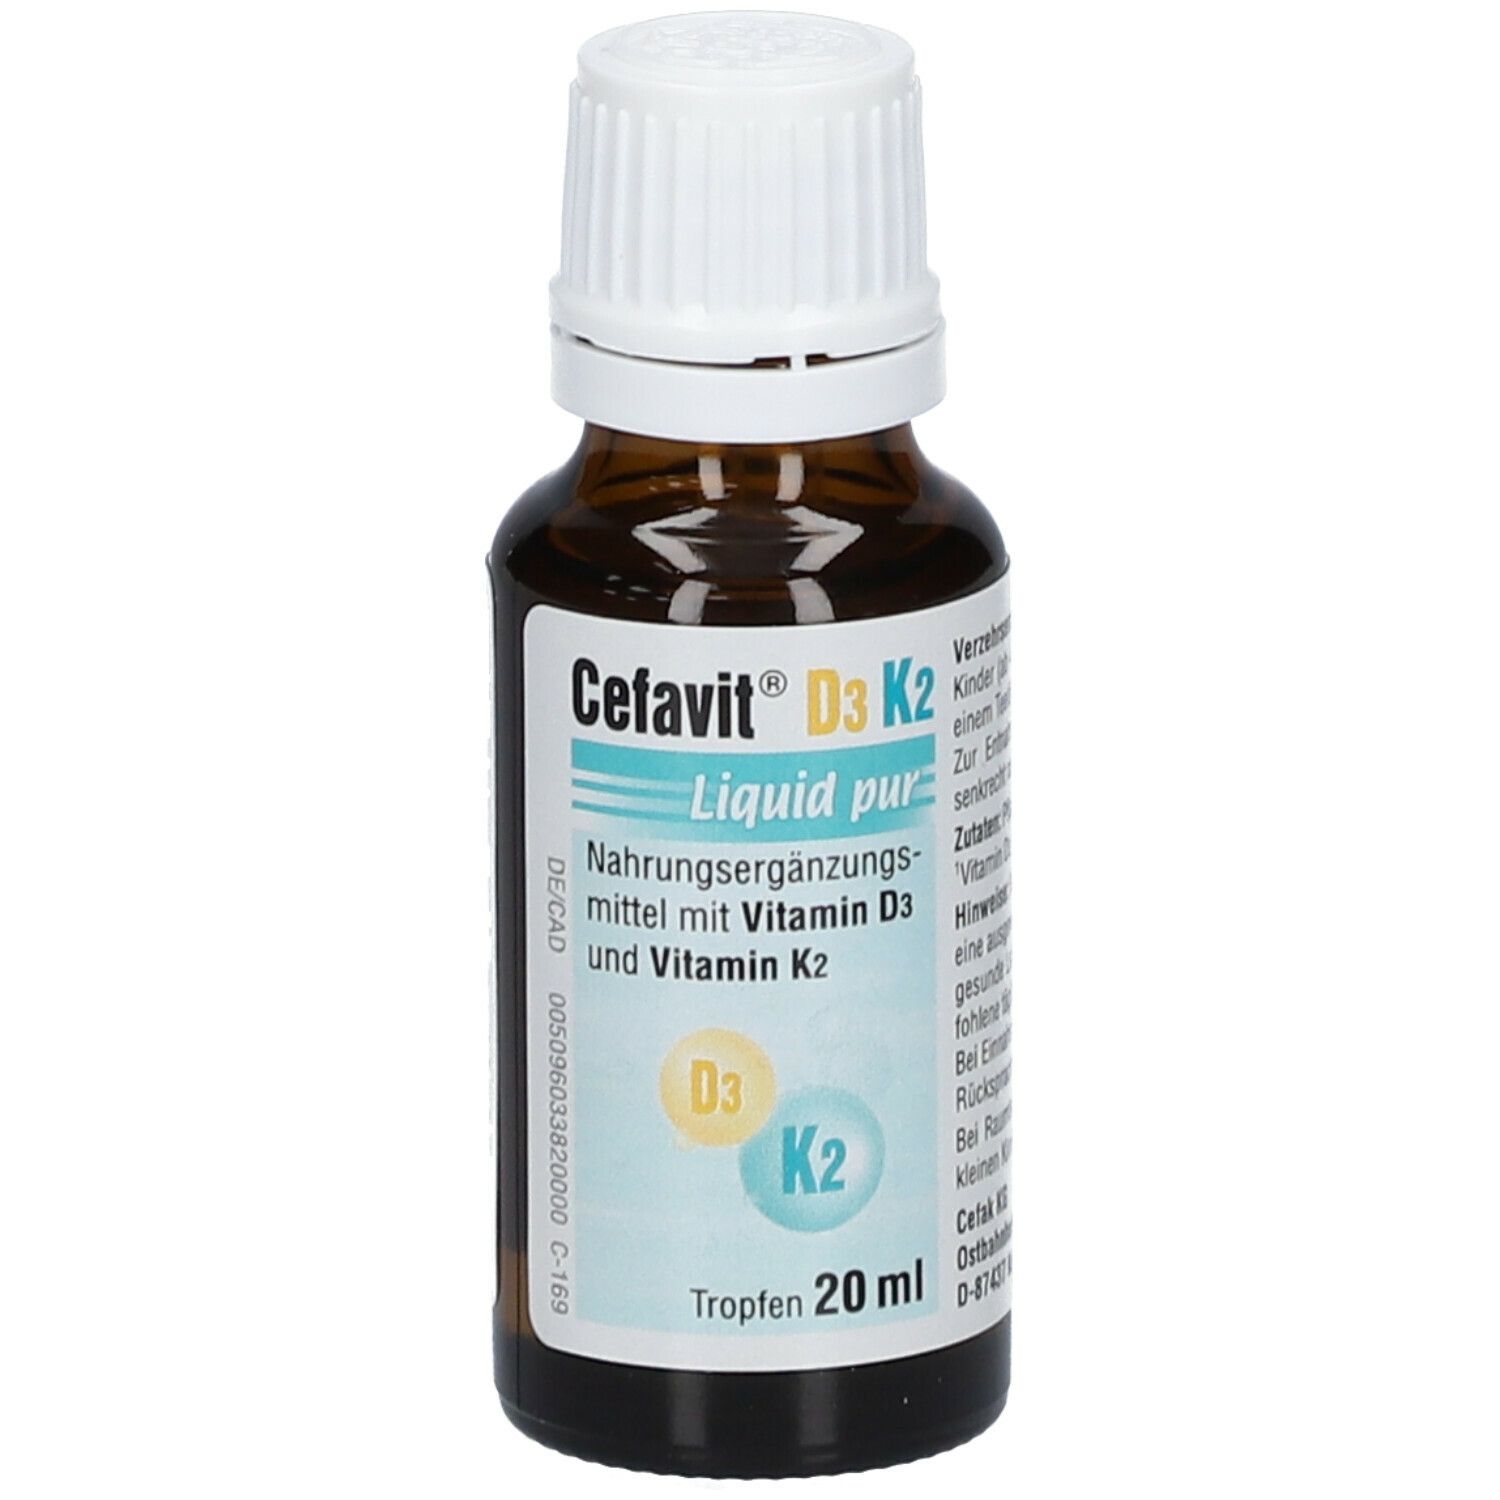 Cefavit® D3 K2 Liquid pur